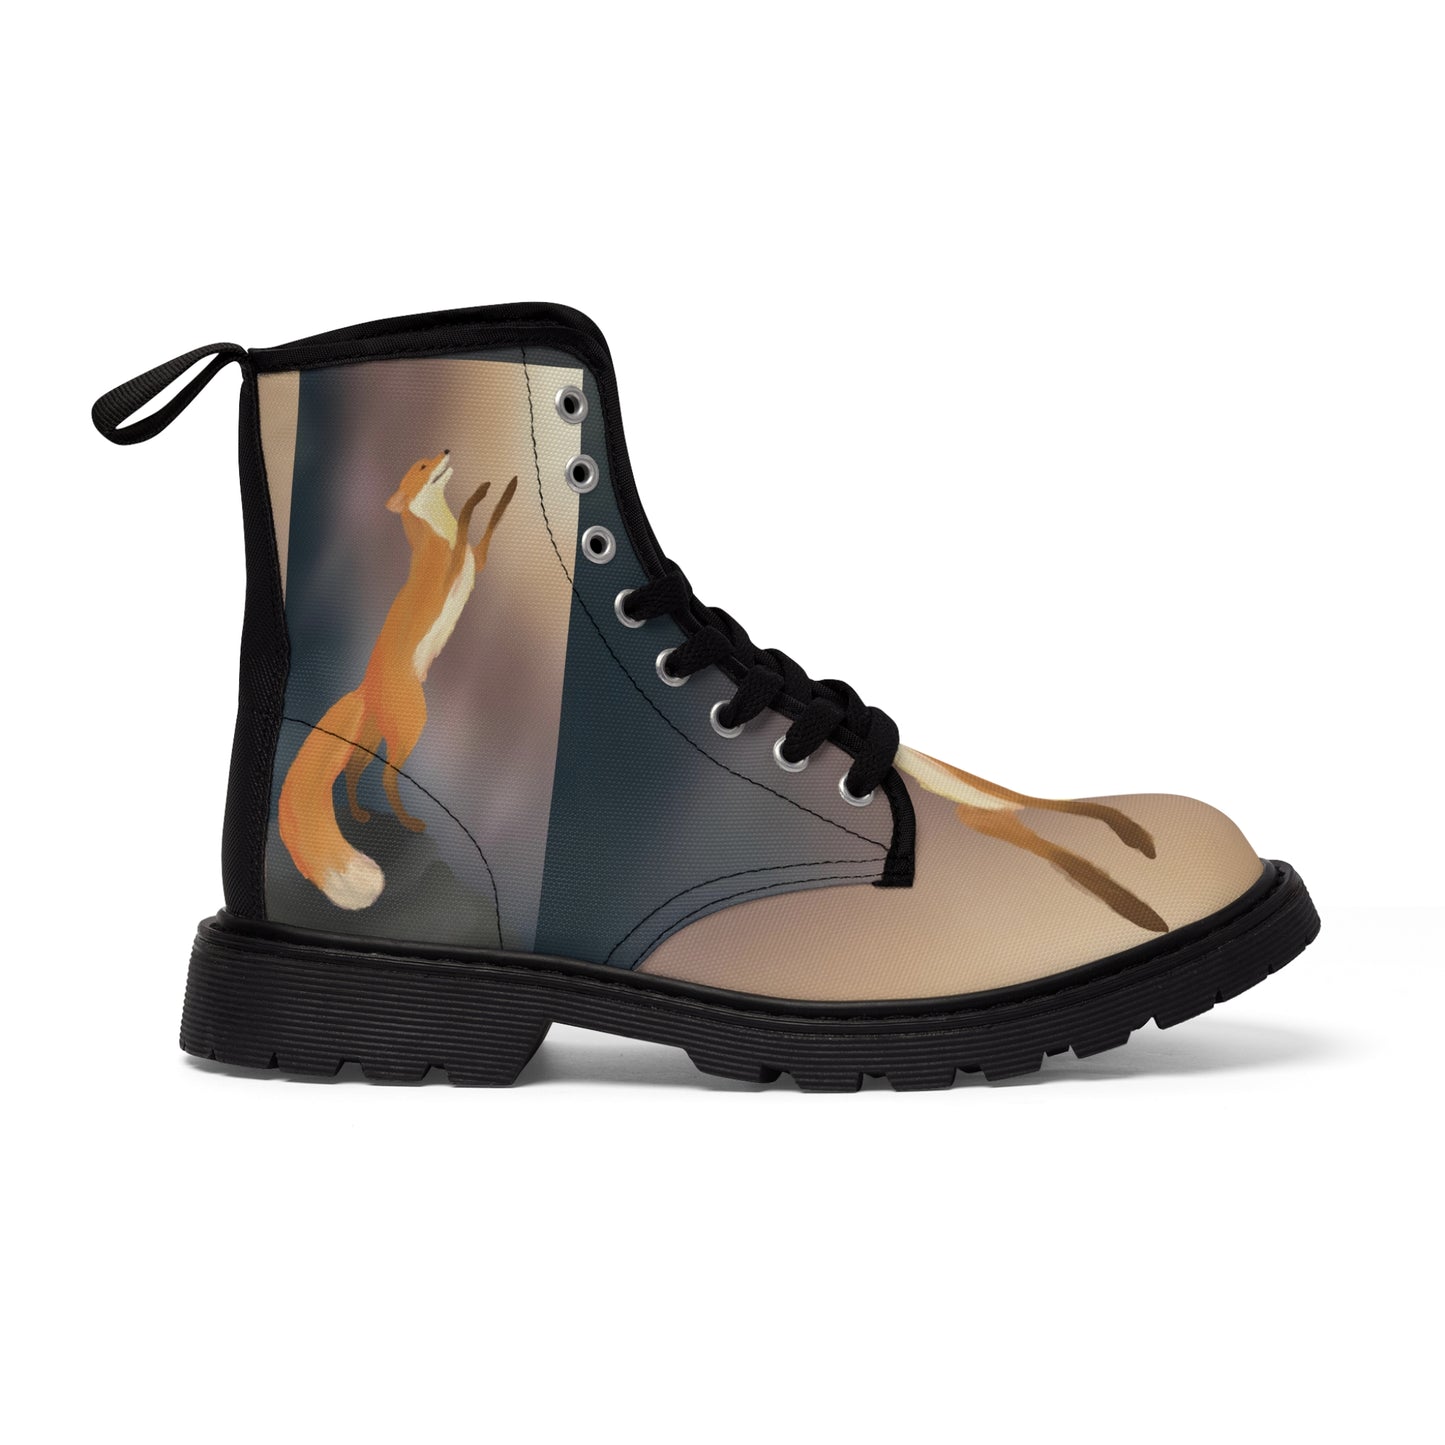 Men's Canvas Boots  "Happy Fox Trot"